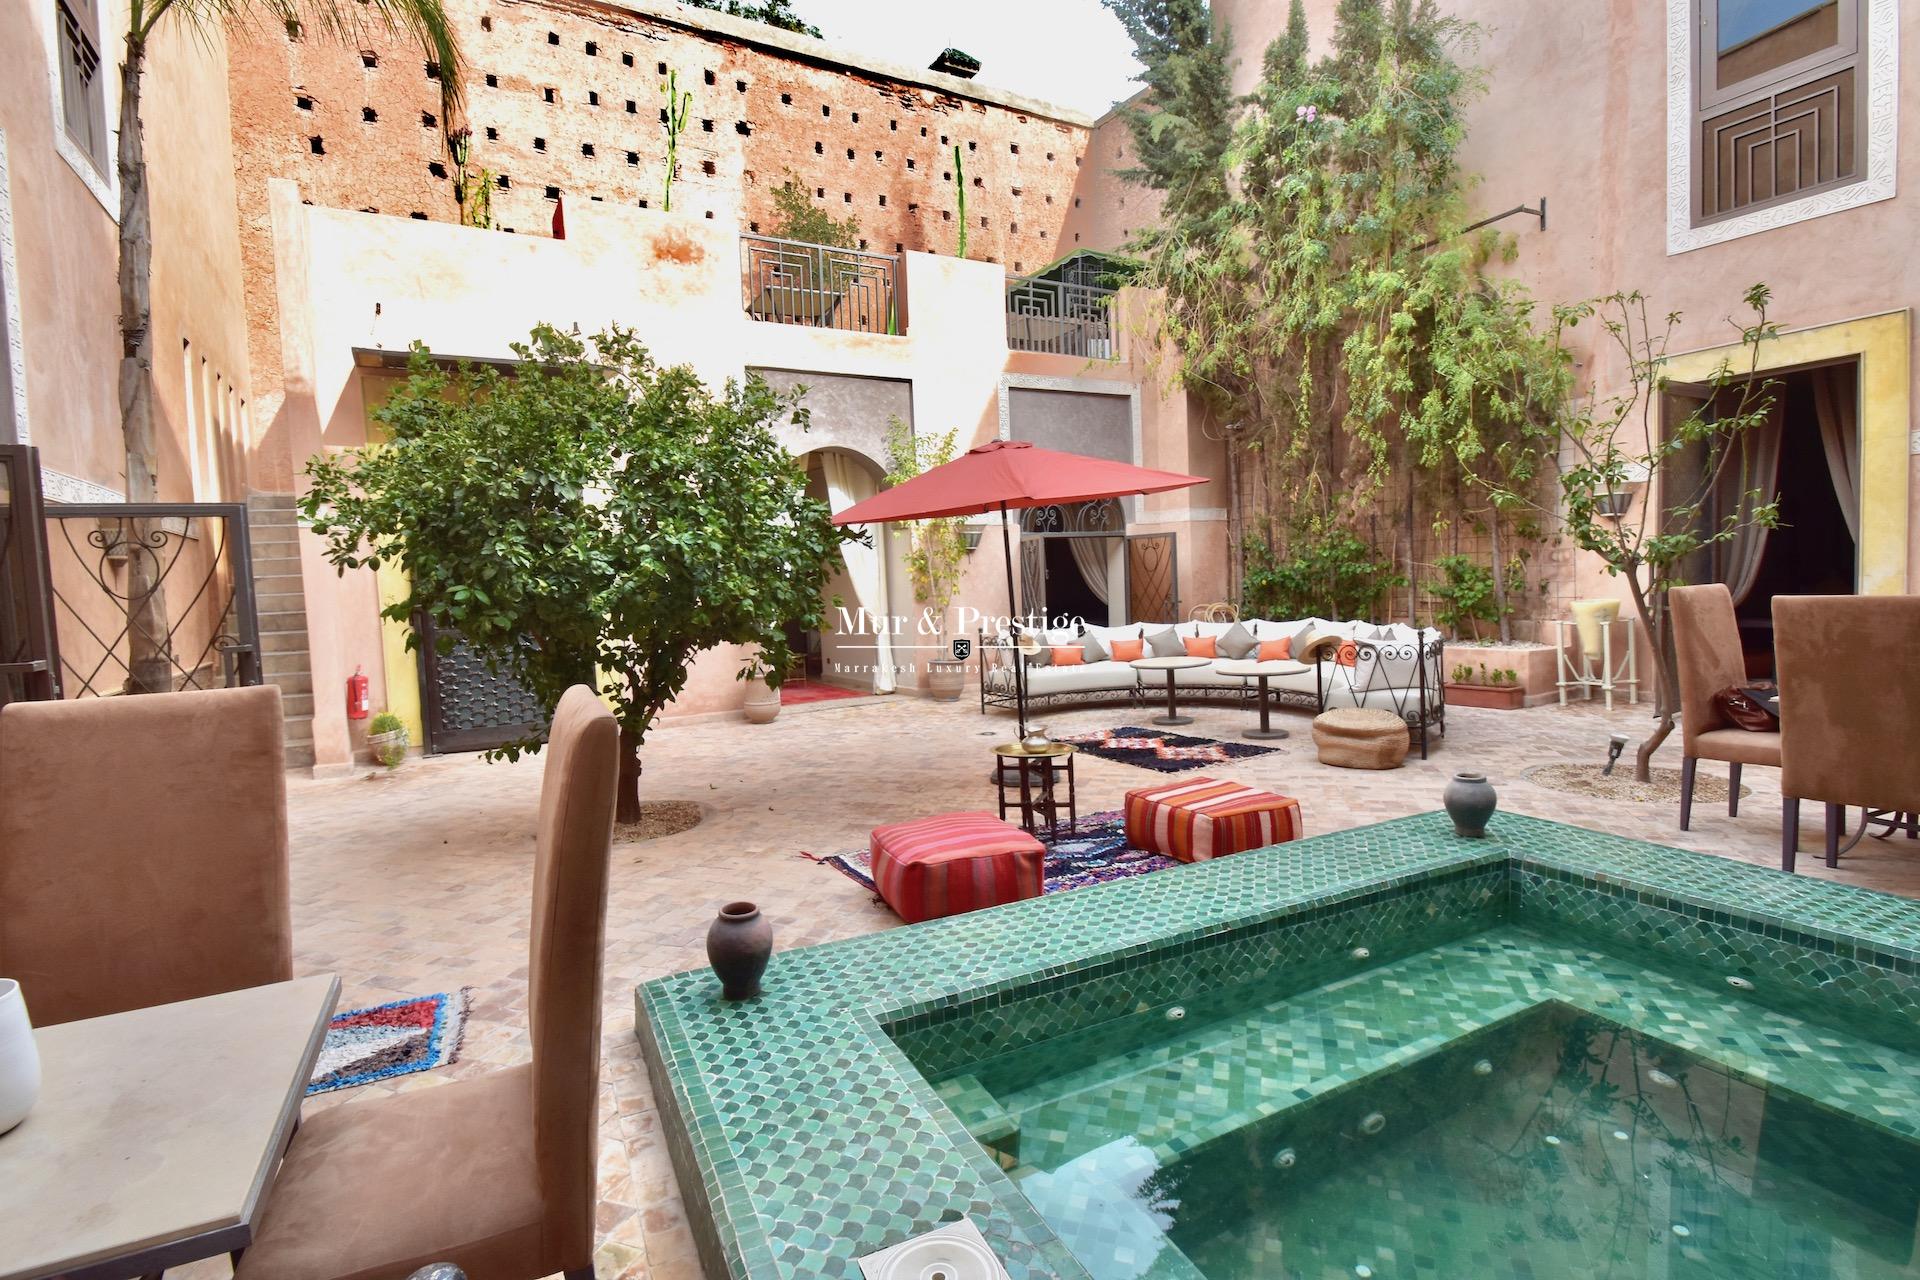 Riad à vendre dans la Médina de Marrakech